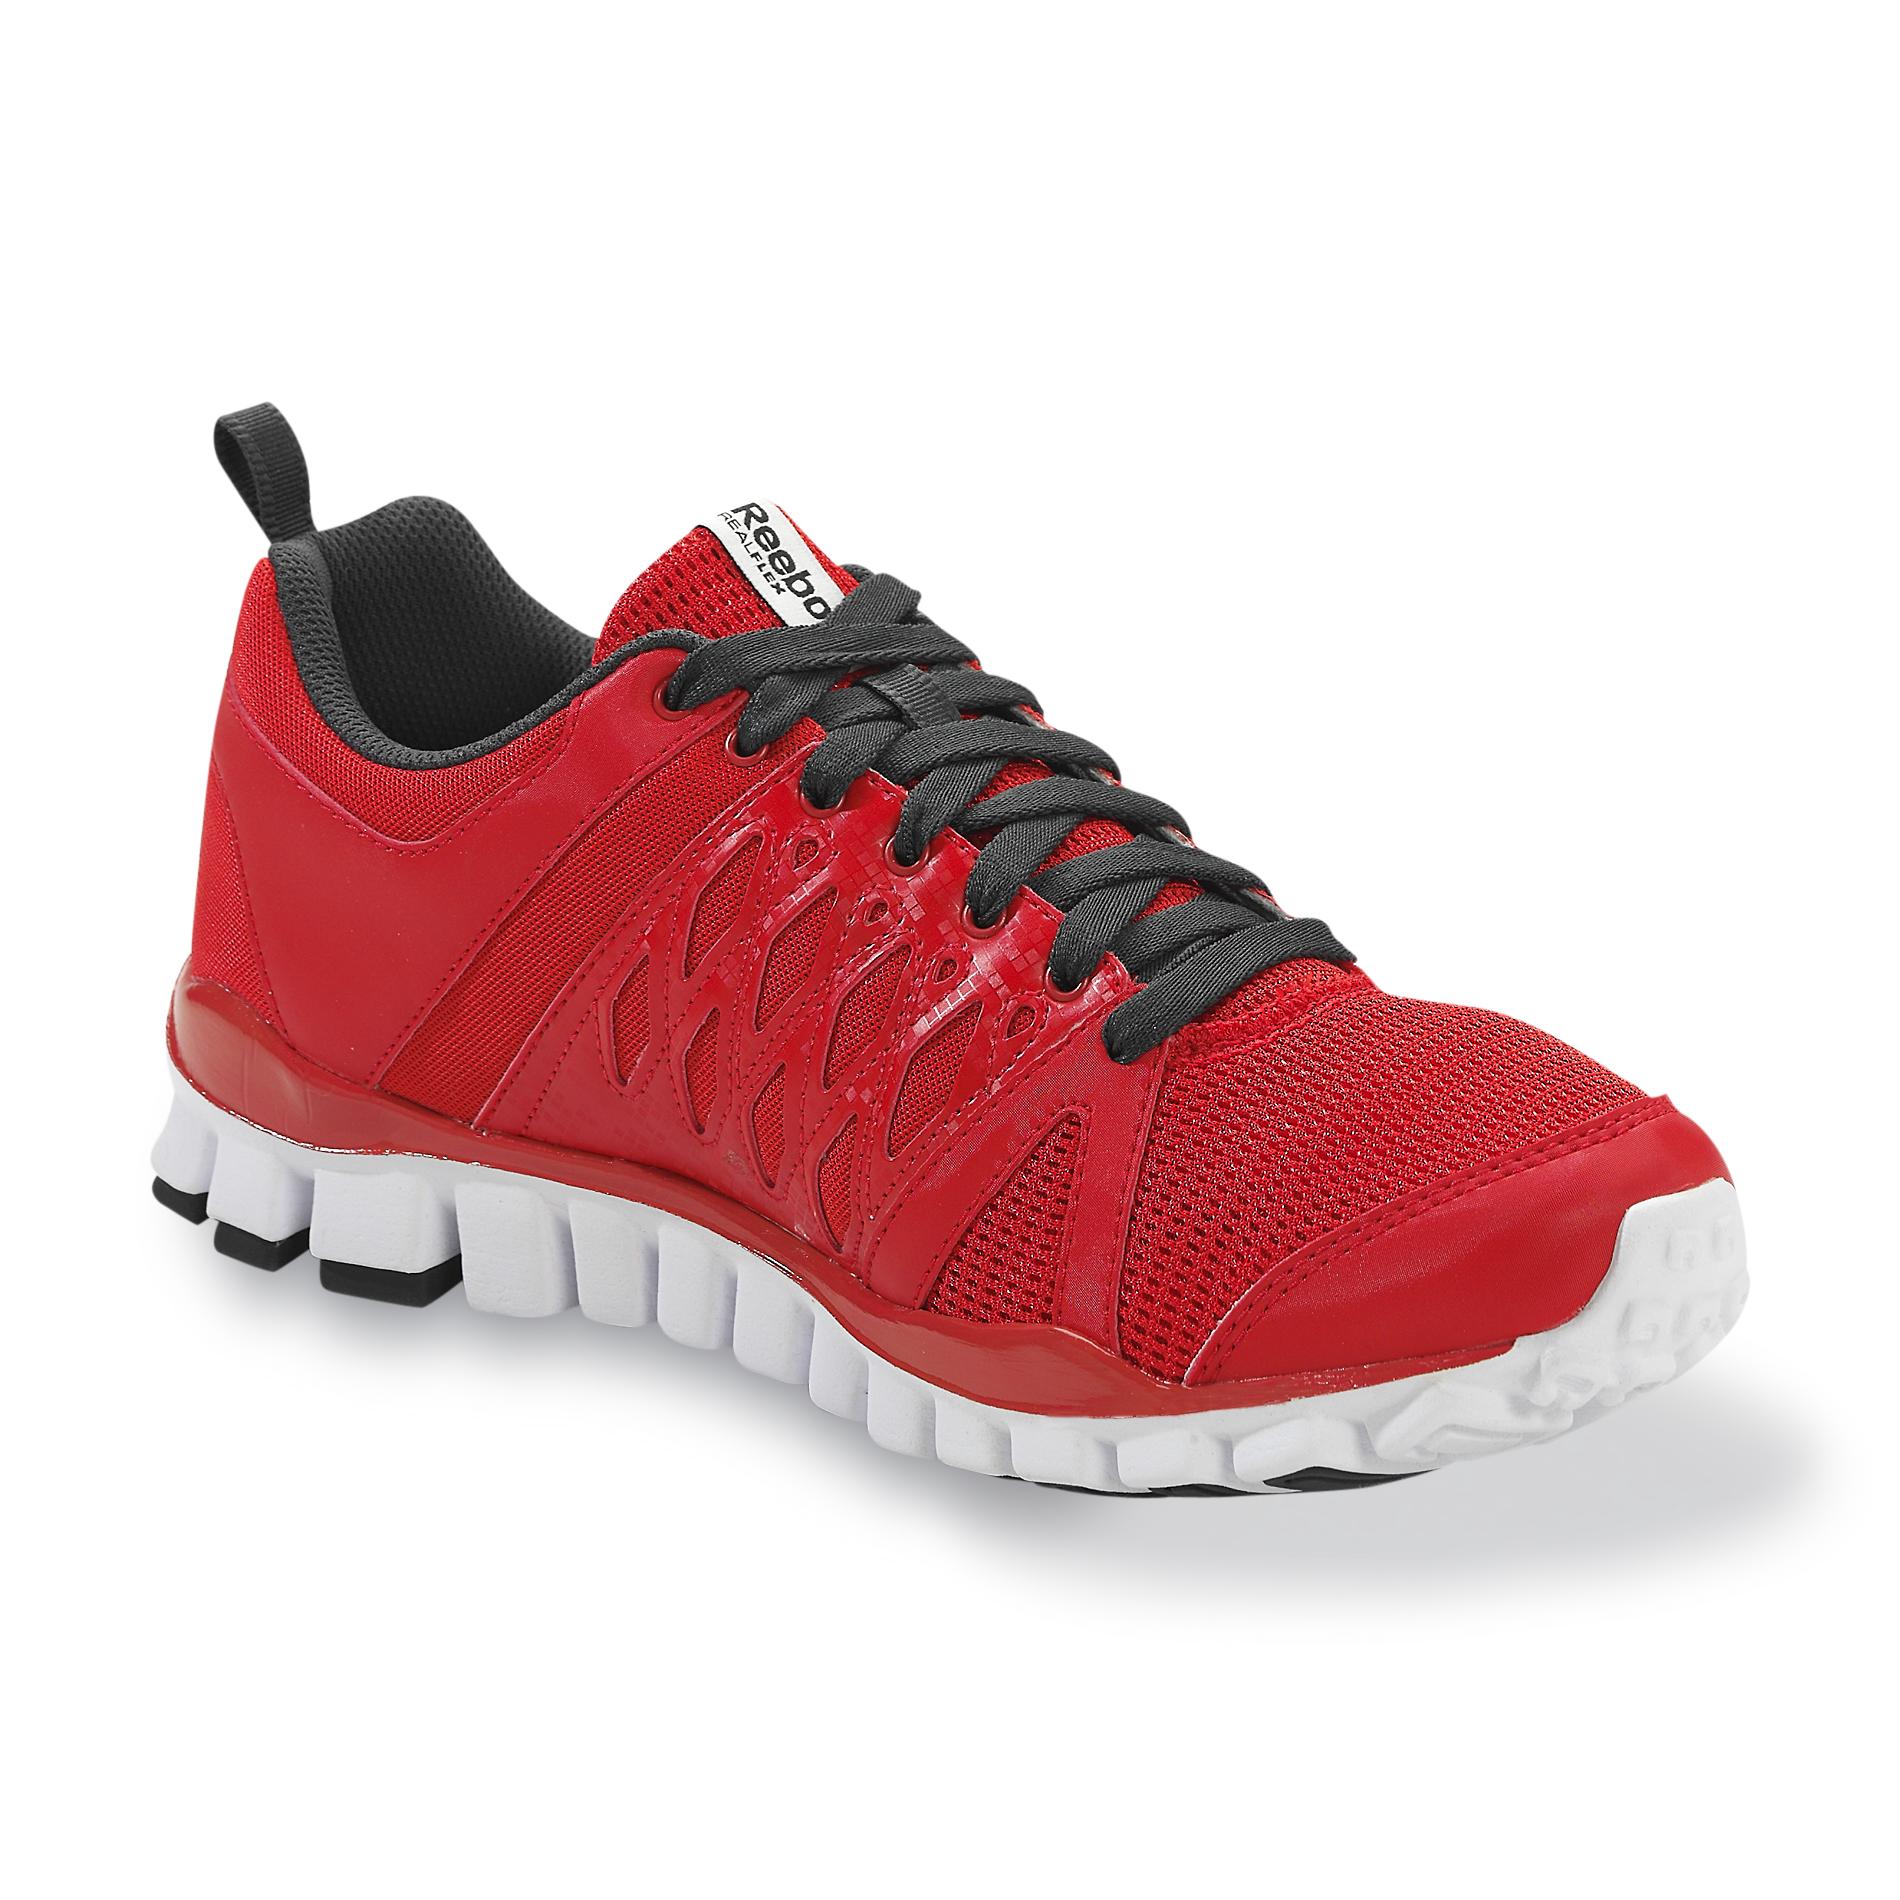 Reebok Men's RealFlex Advance 2.0 Red Athletic Shoe